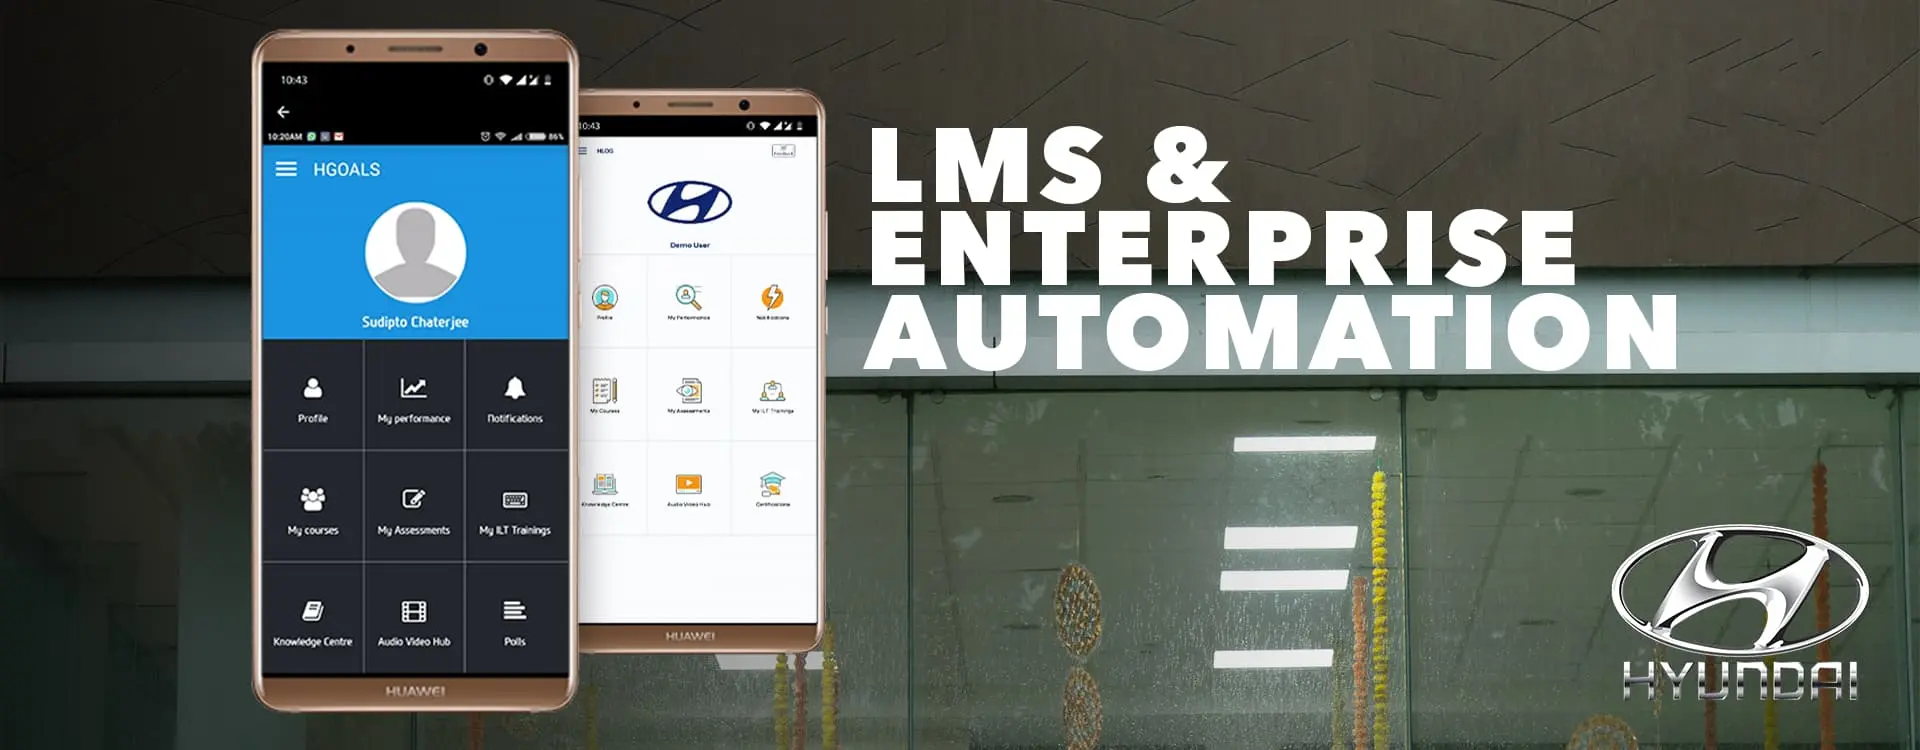 LMS mobile application development company